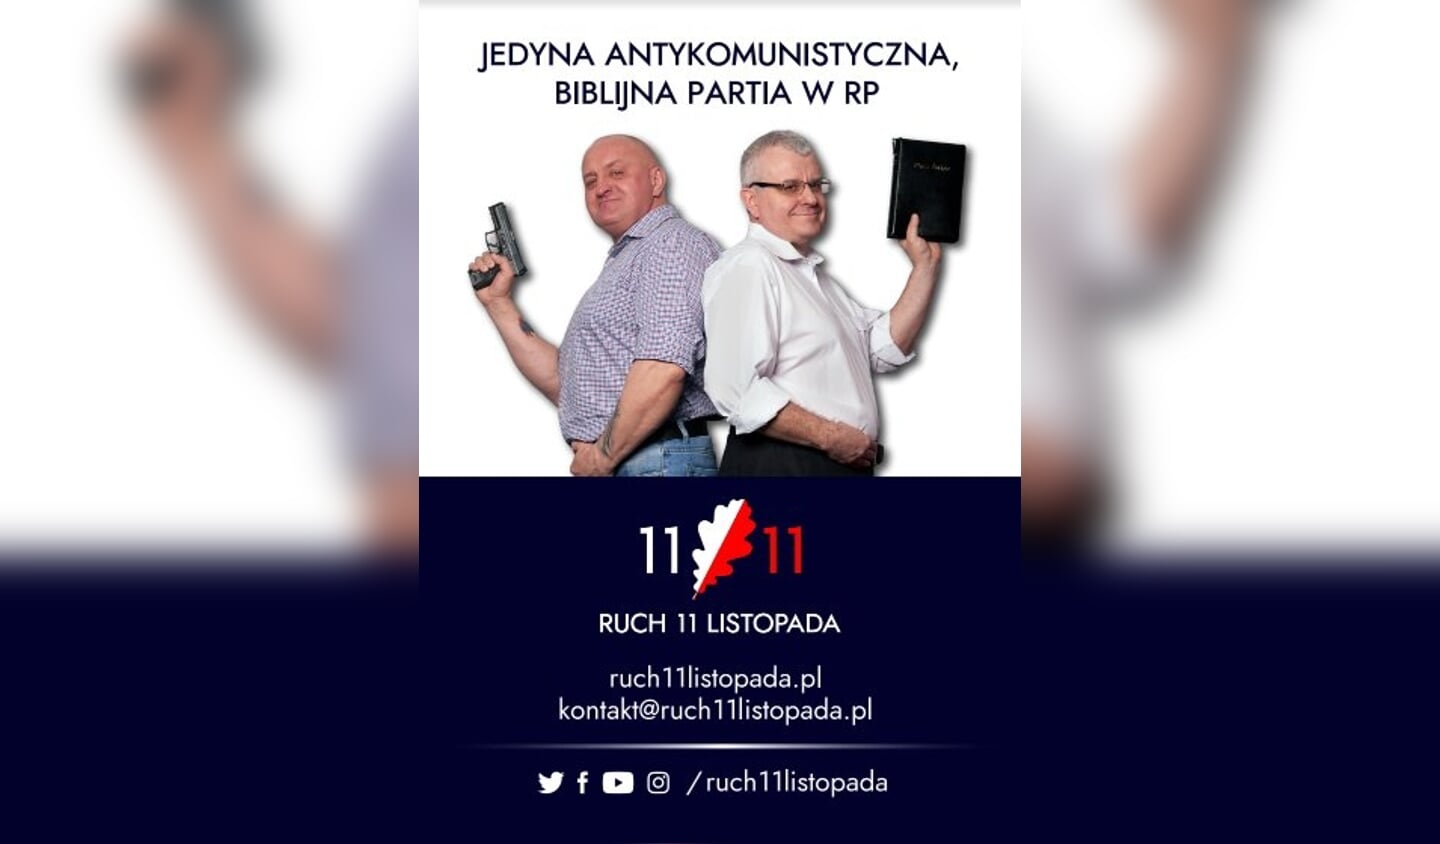 In 2018 startten Marian Kowalski en Pawel Chojecki de Beweging 11 November die als partij weer ter ziele ging.